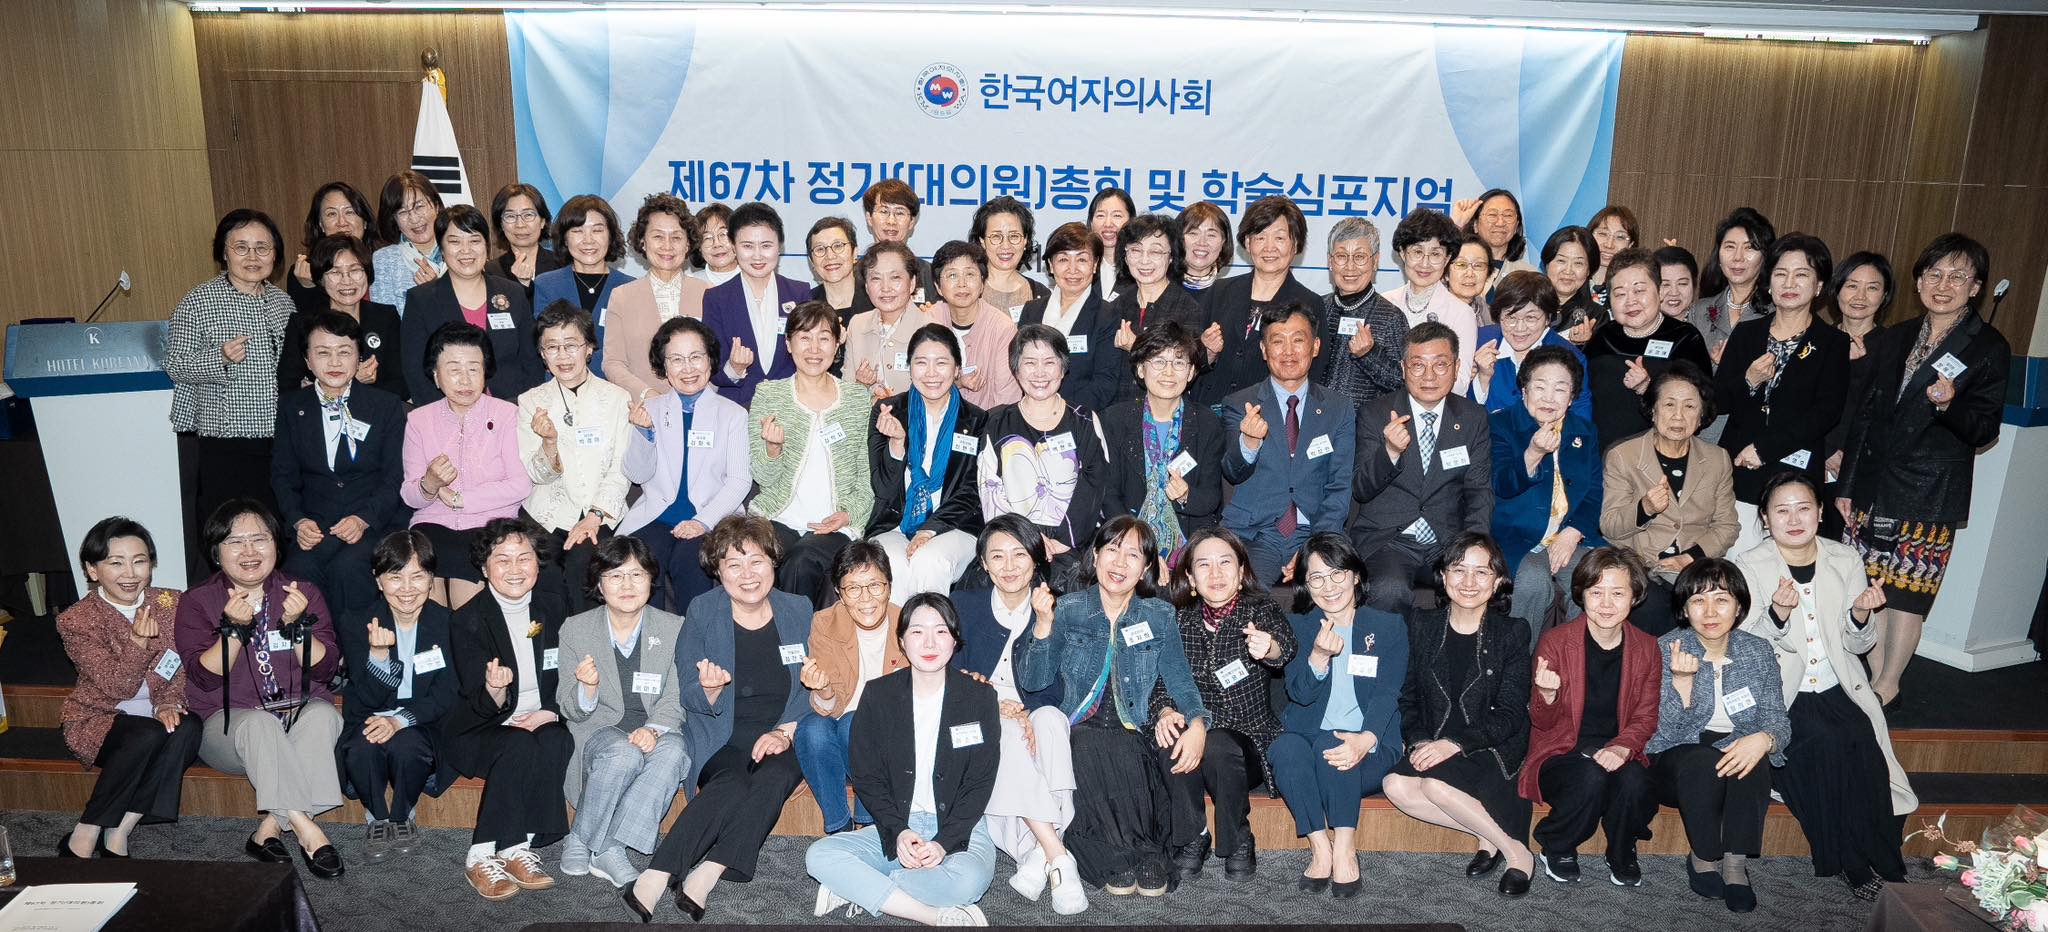 KMWA hosts the 67th Annual General Meeting of Representatives at the Koreana Hotel